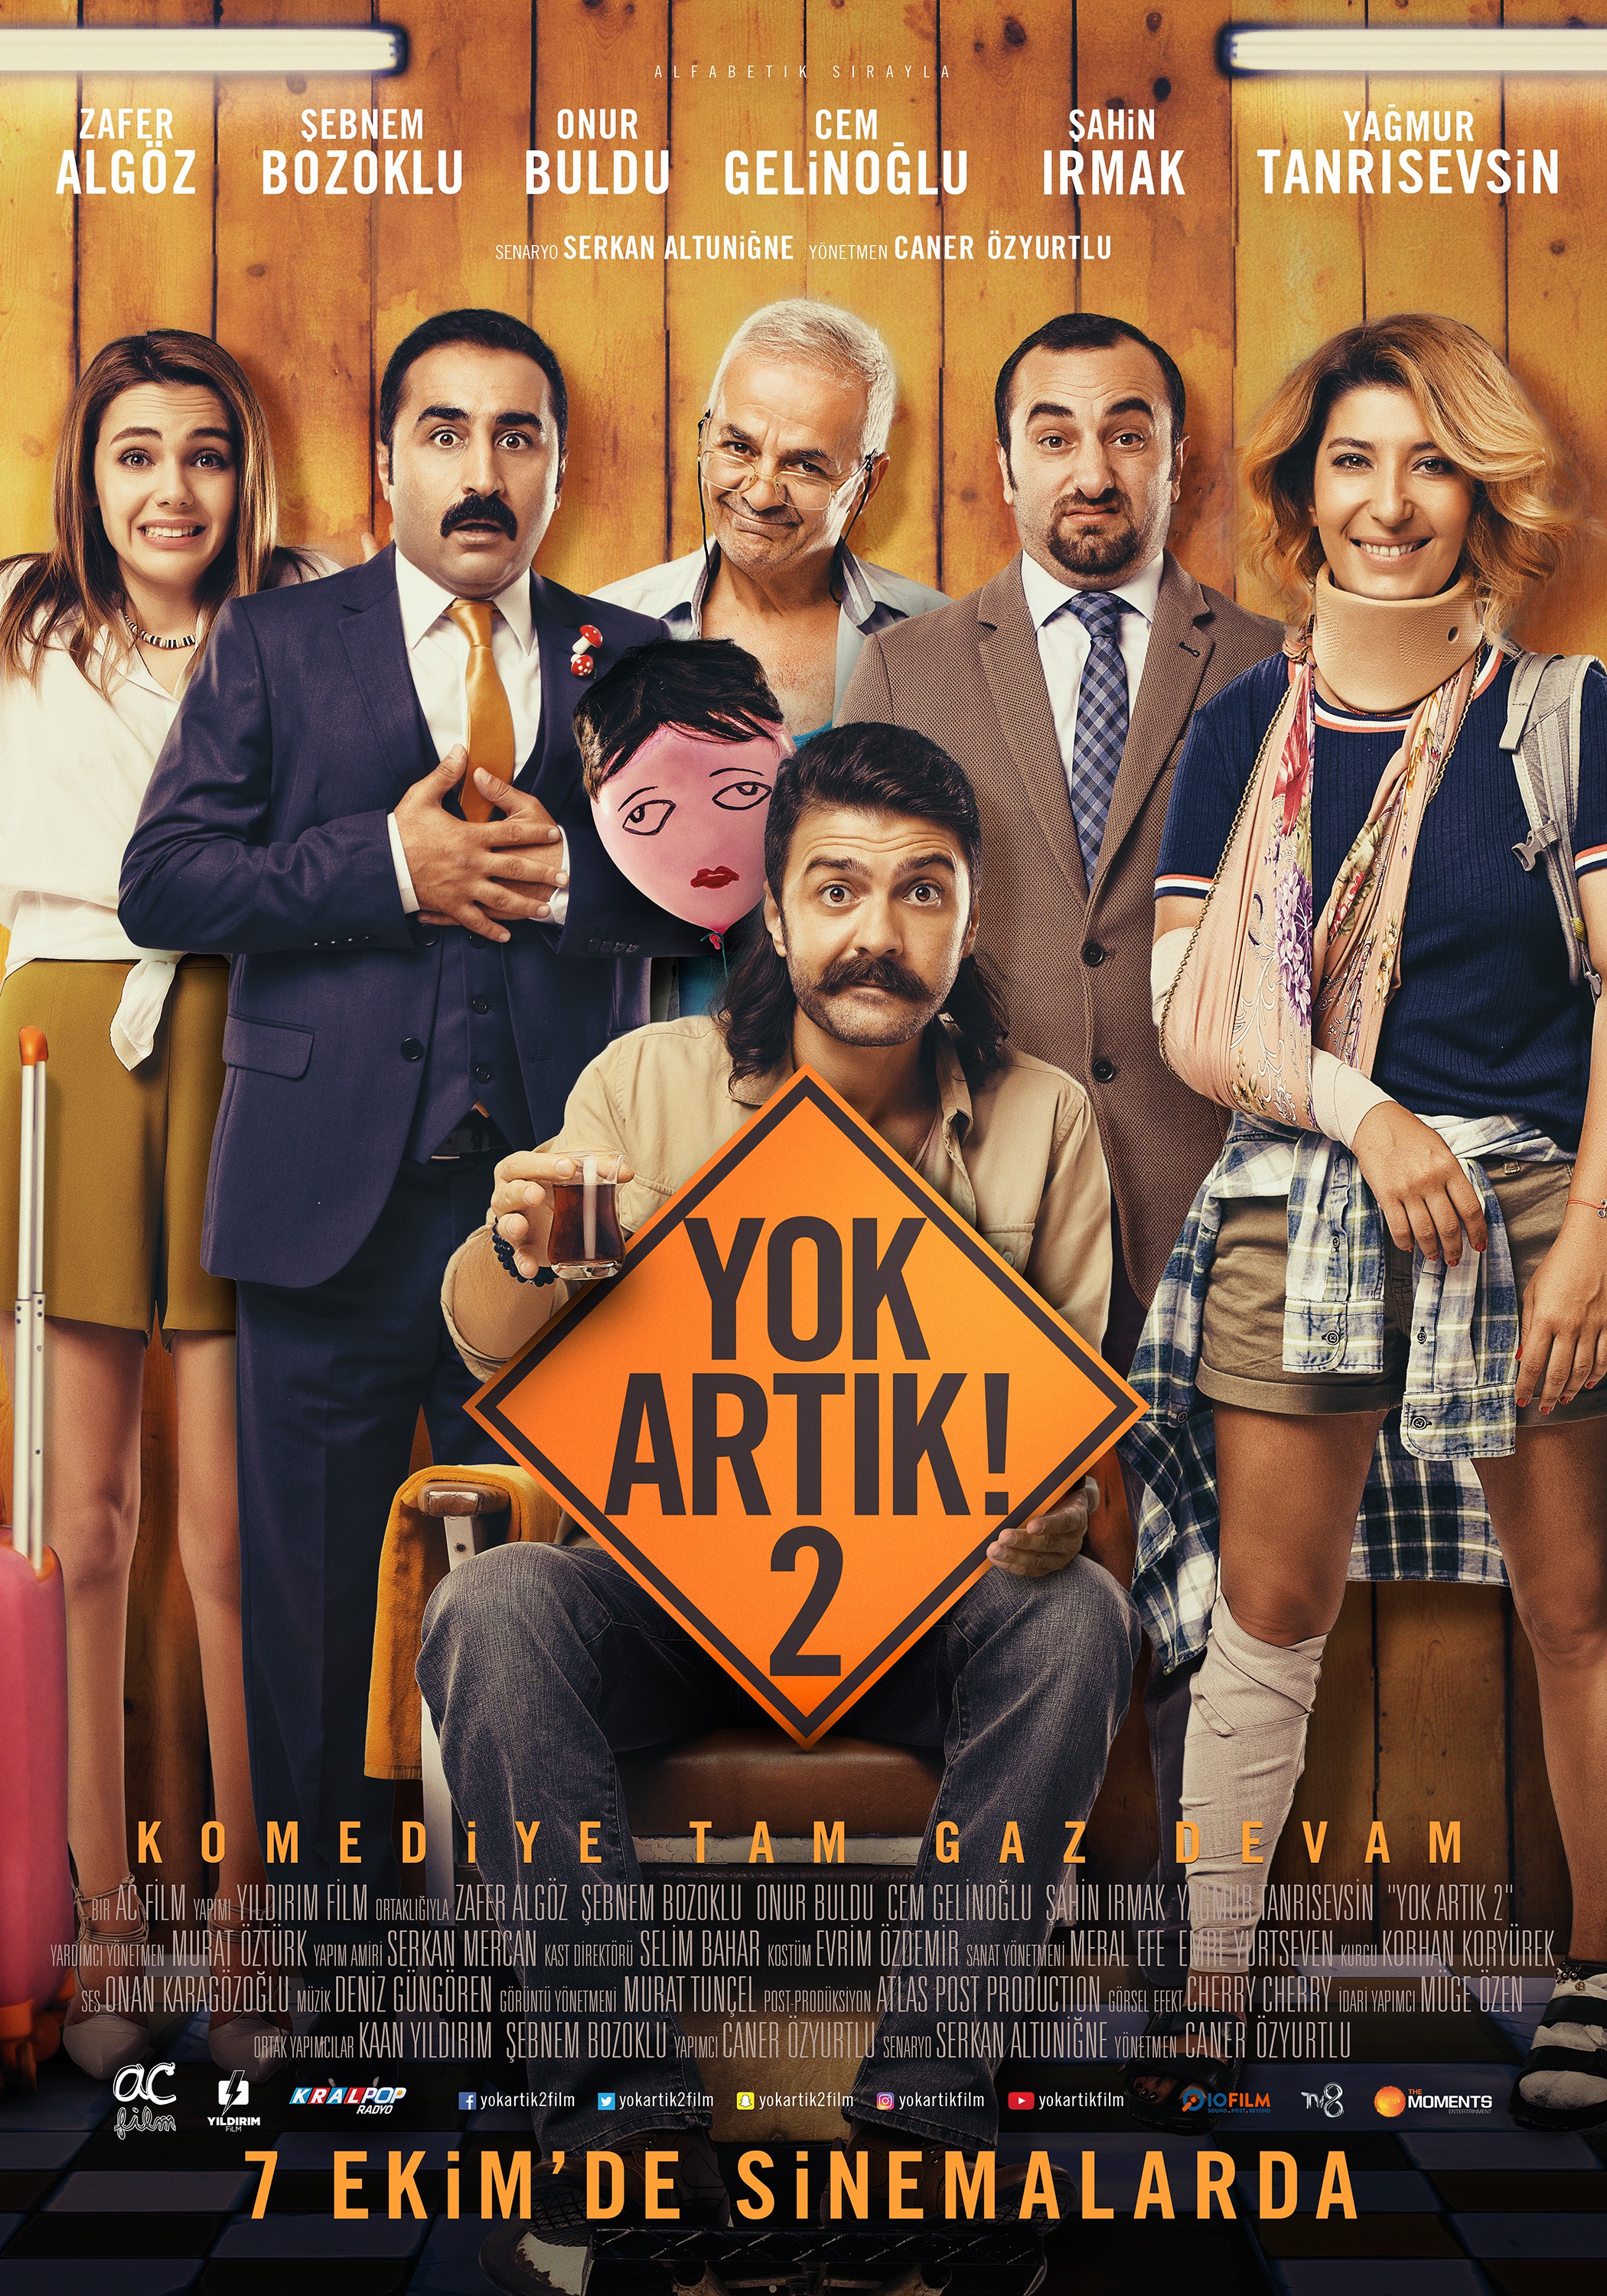 Mega Sized Movie Poster Image for Yok Artik 2 